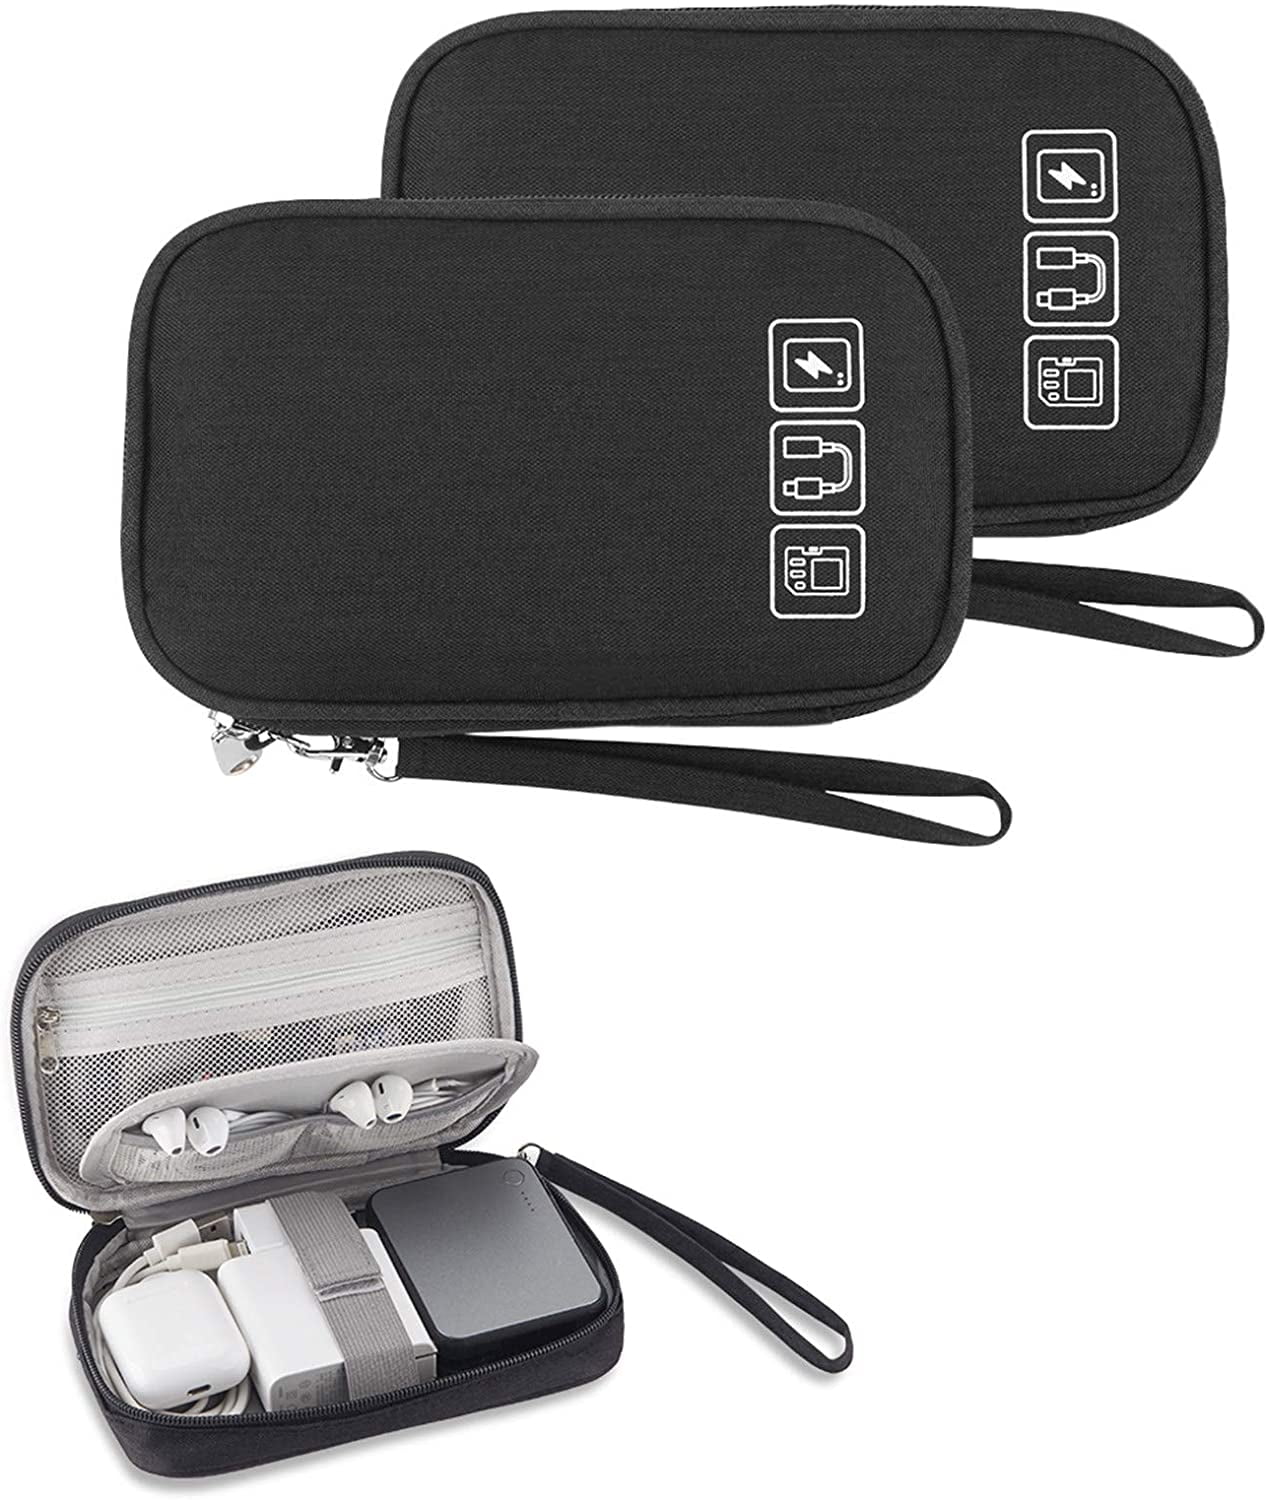 USB Flash Drives Case Organizer Bag Digital Storage Pouch Earphone Cable Travel